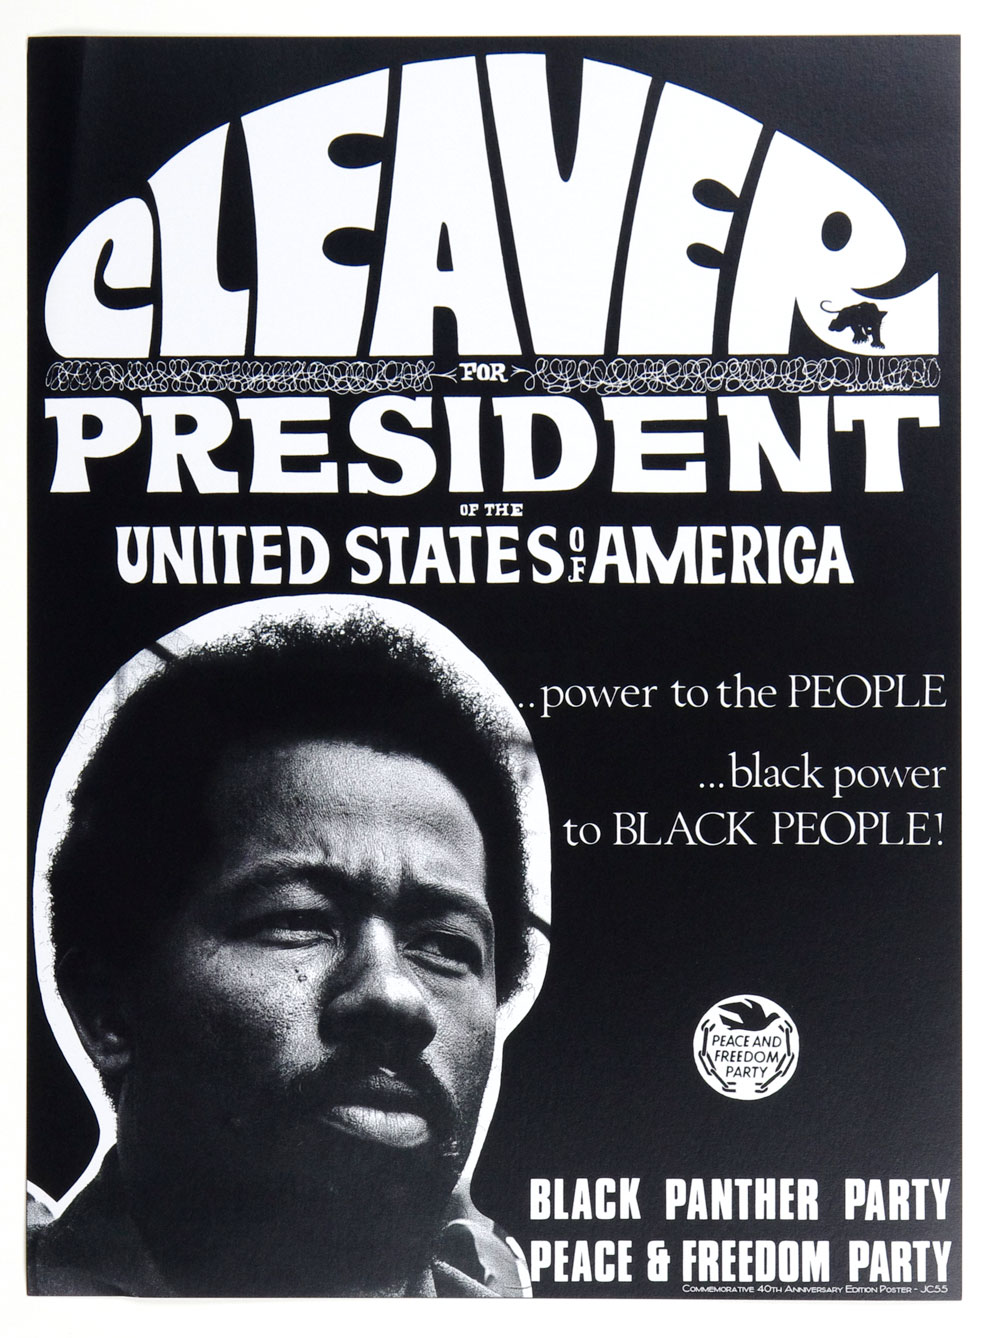 Eldridge Cleaver Poster 40th Anniversary edition 2007